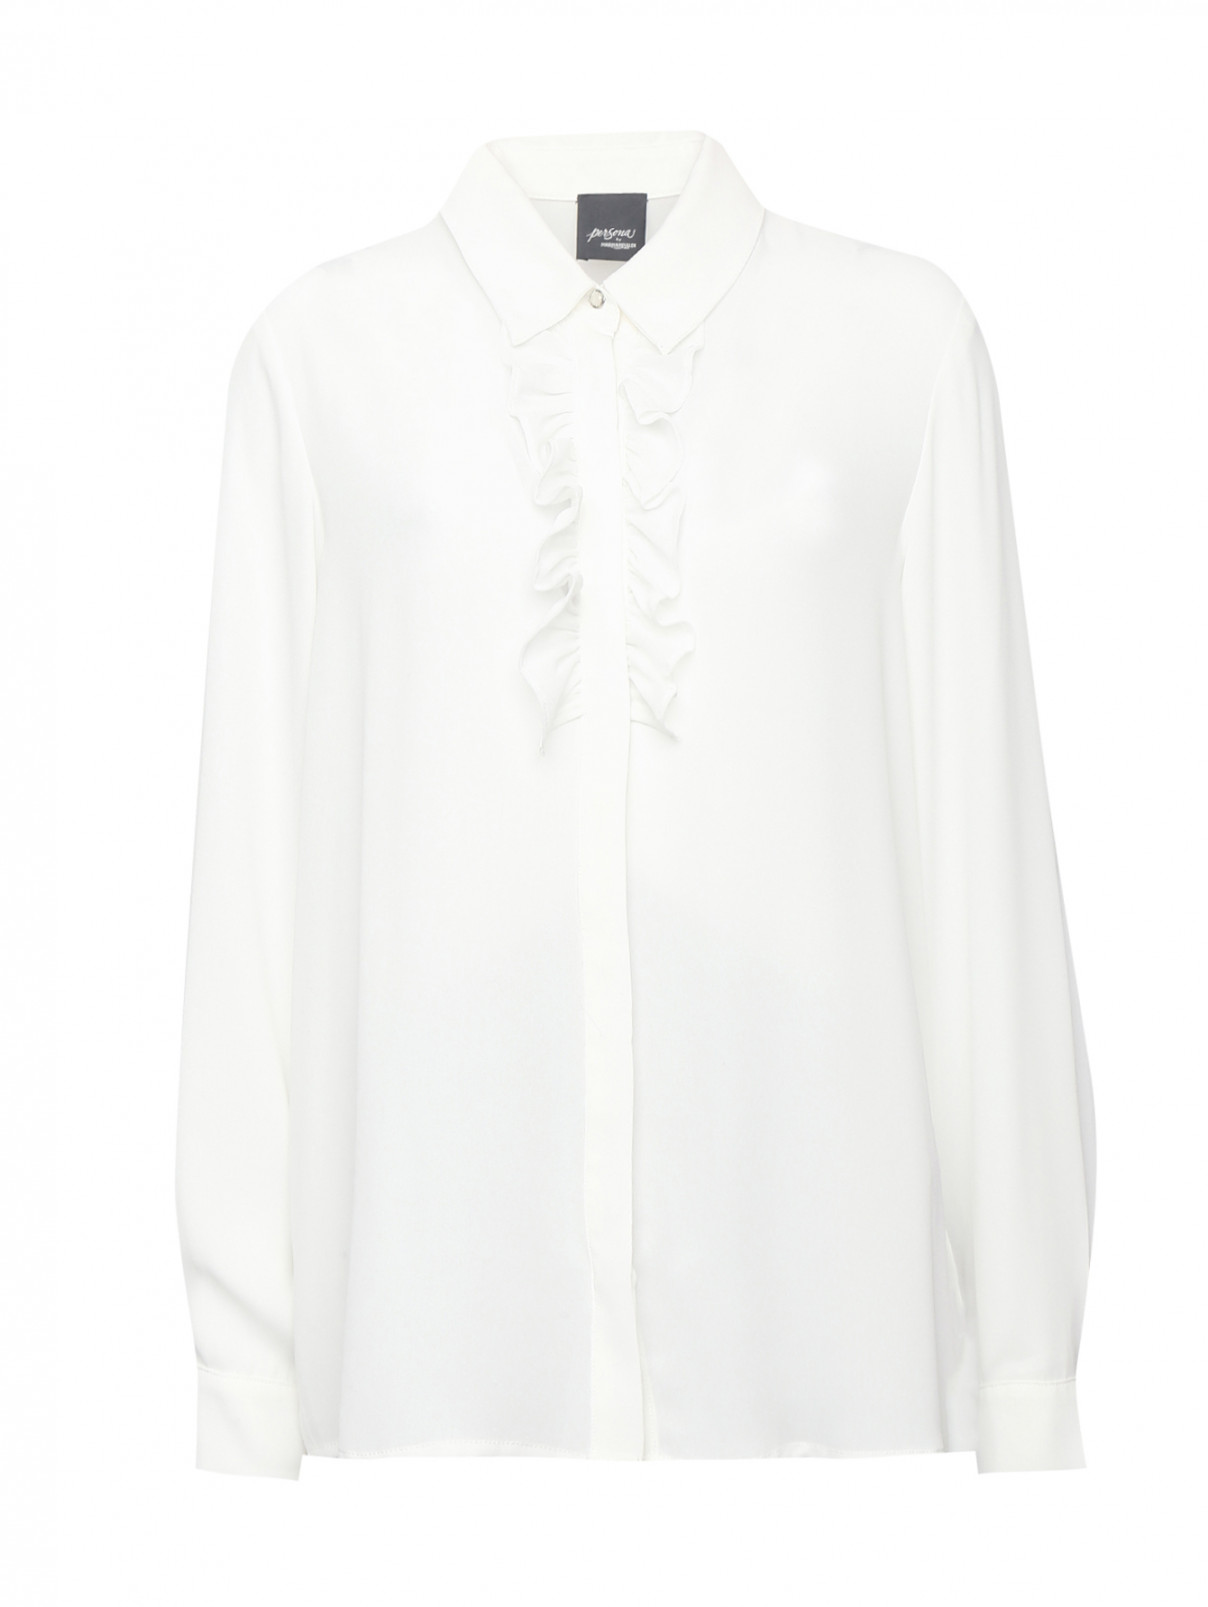 Блуза с оборками Persona by Marina Rinaldi  –  Общий вид  – Цвет:  Белый